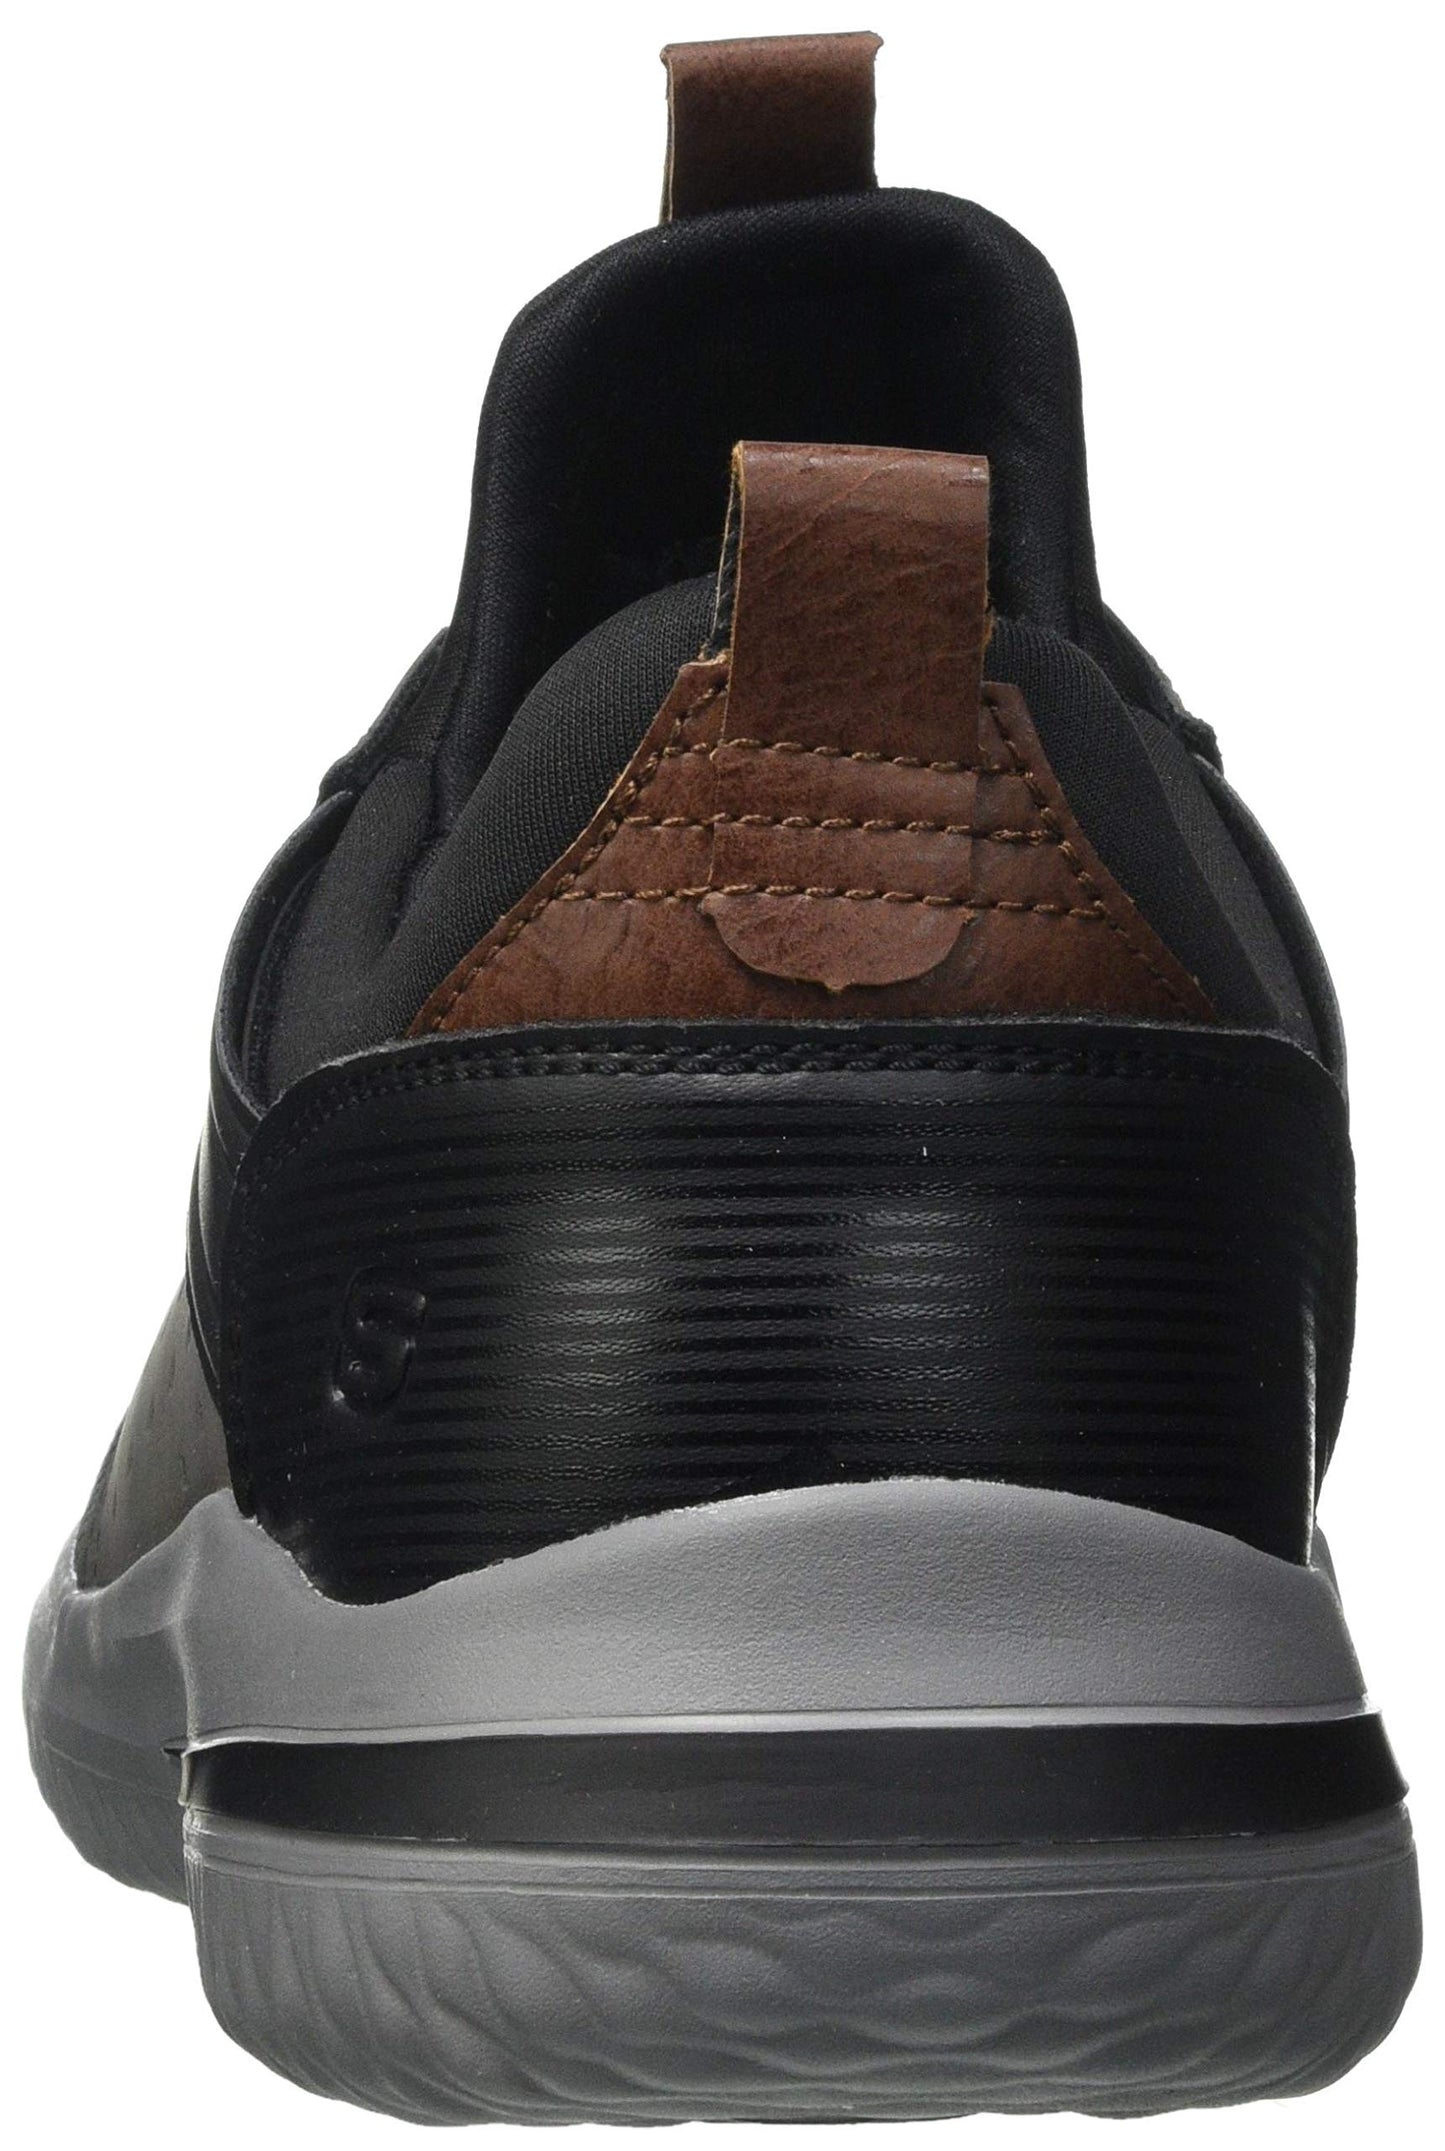 Skechers Men's Delson 3.0 Cicada Sneaker, Black/Grey, 9